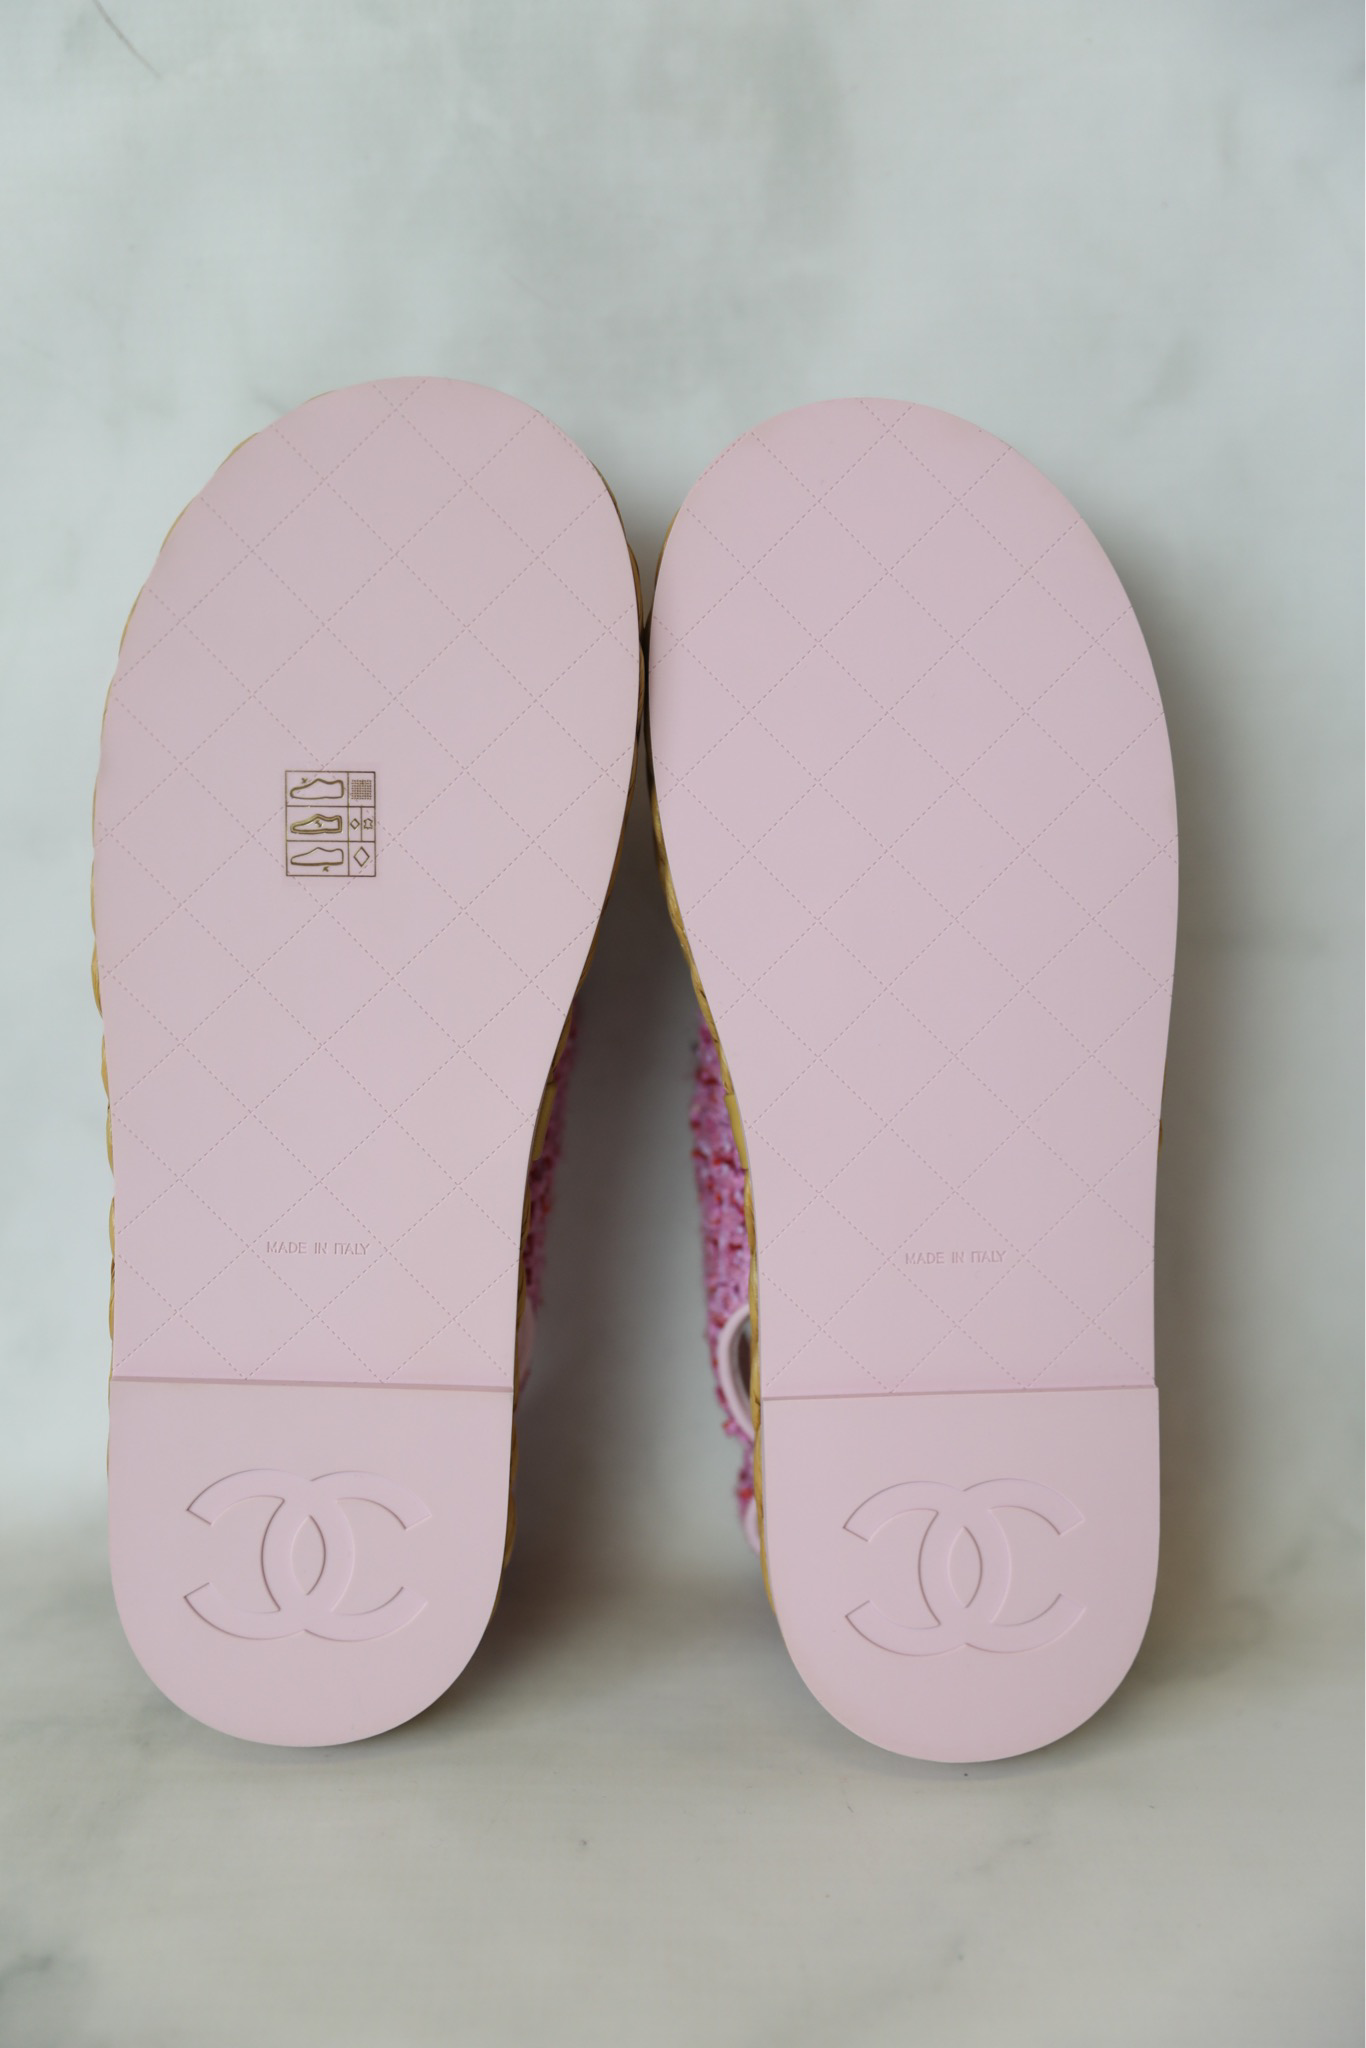 Chanel Sandals Dad Pink Tweed, Size 41, New in Box WA001 - Julia Rose  Boston